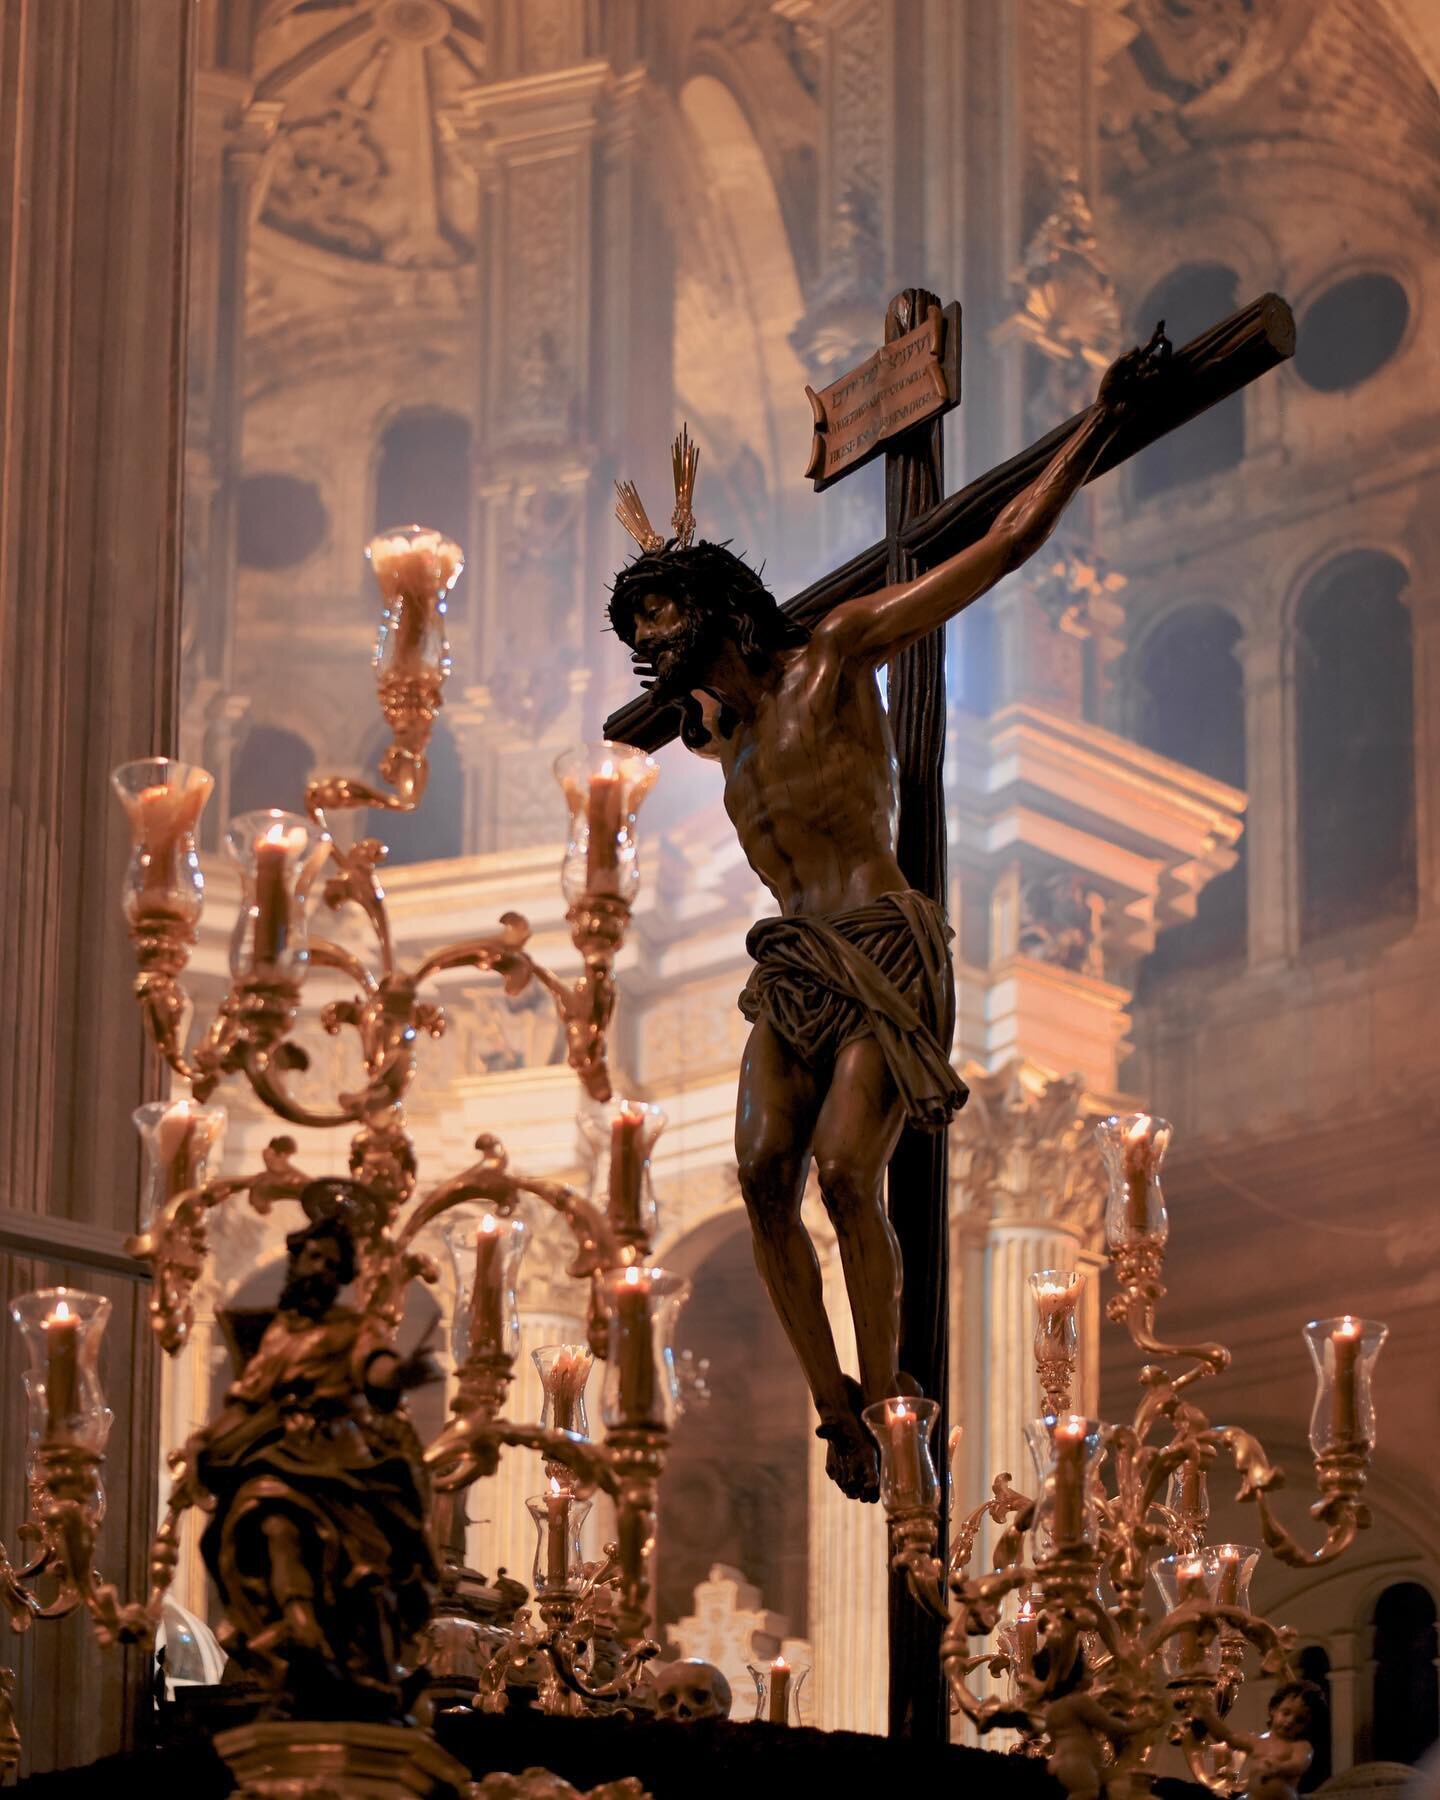 Cristo de la Agon&iacute;a.
@hdadlaspenas 

#malaga #cofradias #cofrad&iacute;asmlg #blancoynegro #andalucia #natgeoyourshot #semanasanta